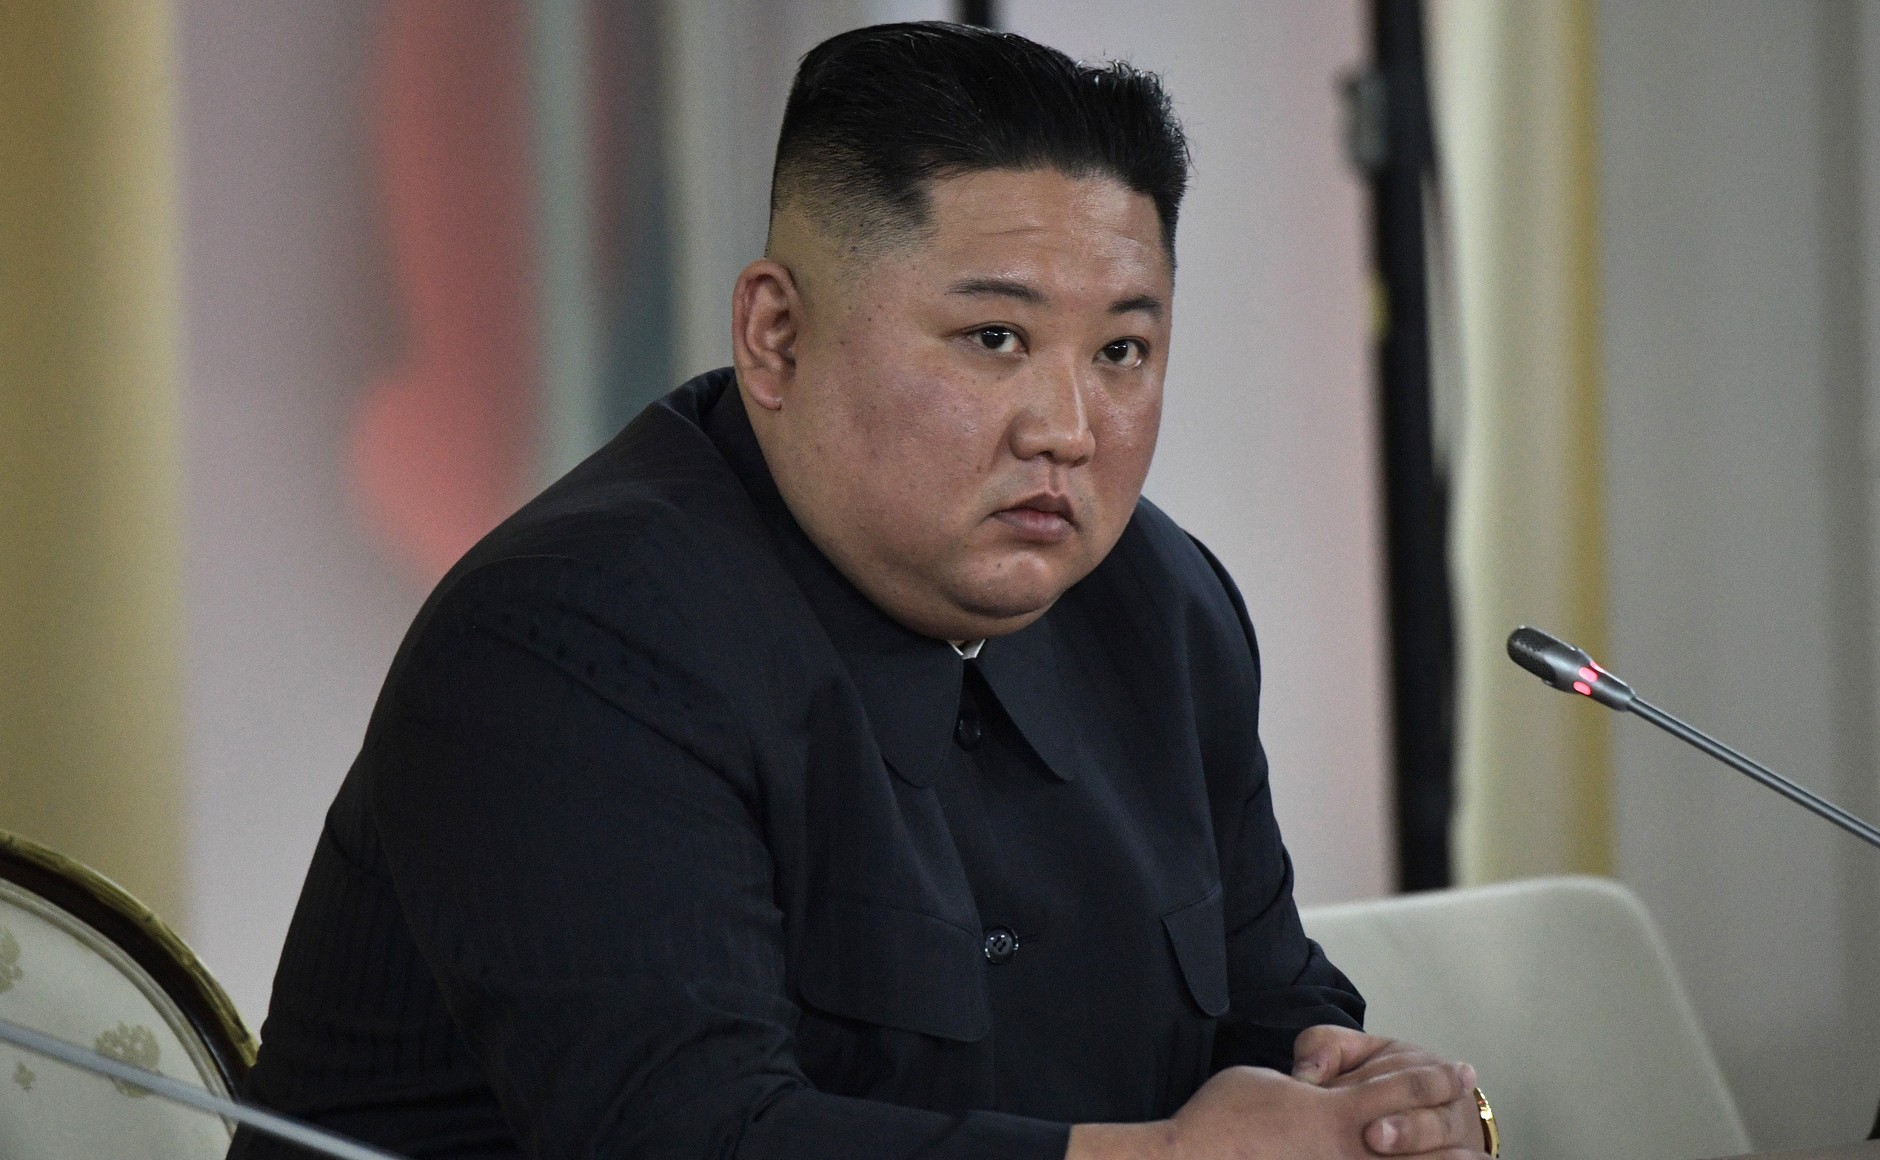 Kim Jong-un’s whereabouts under international speculations